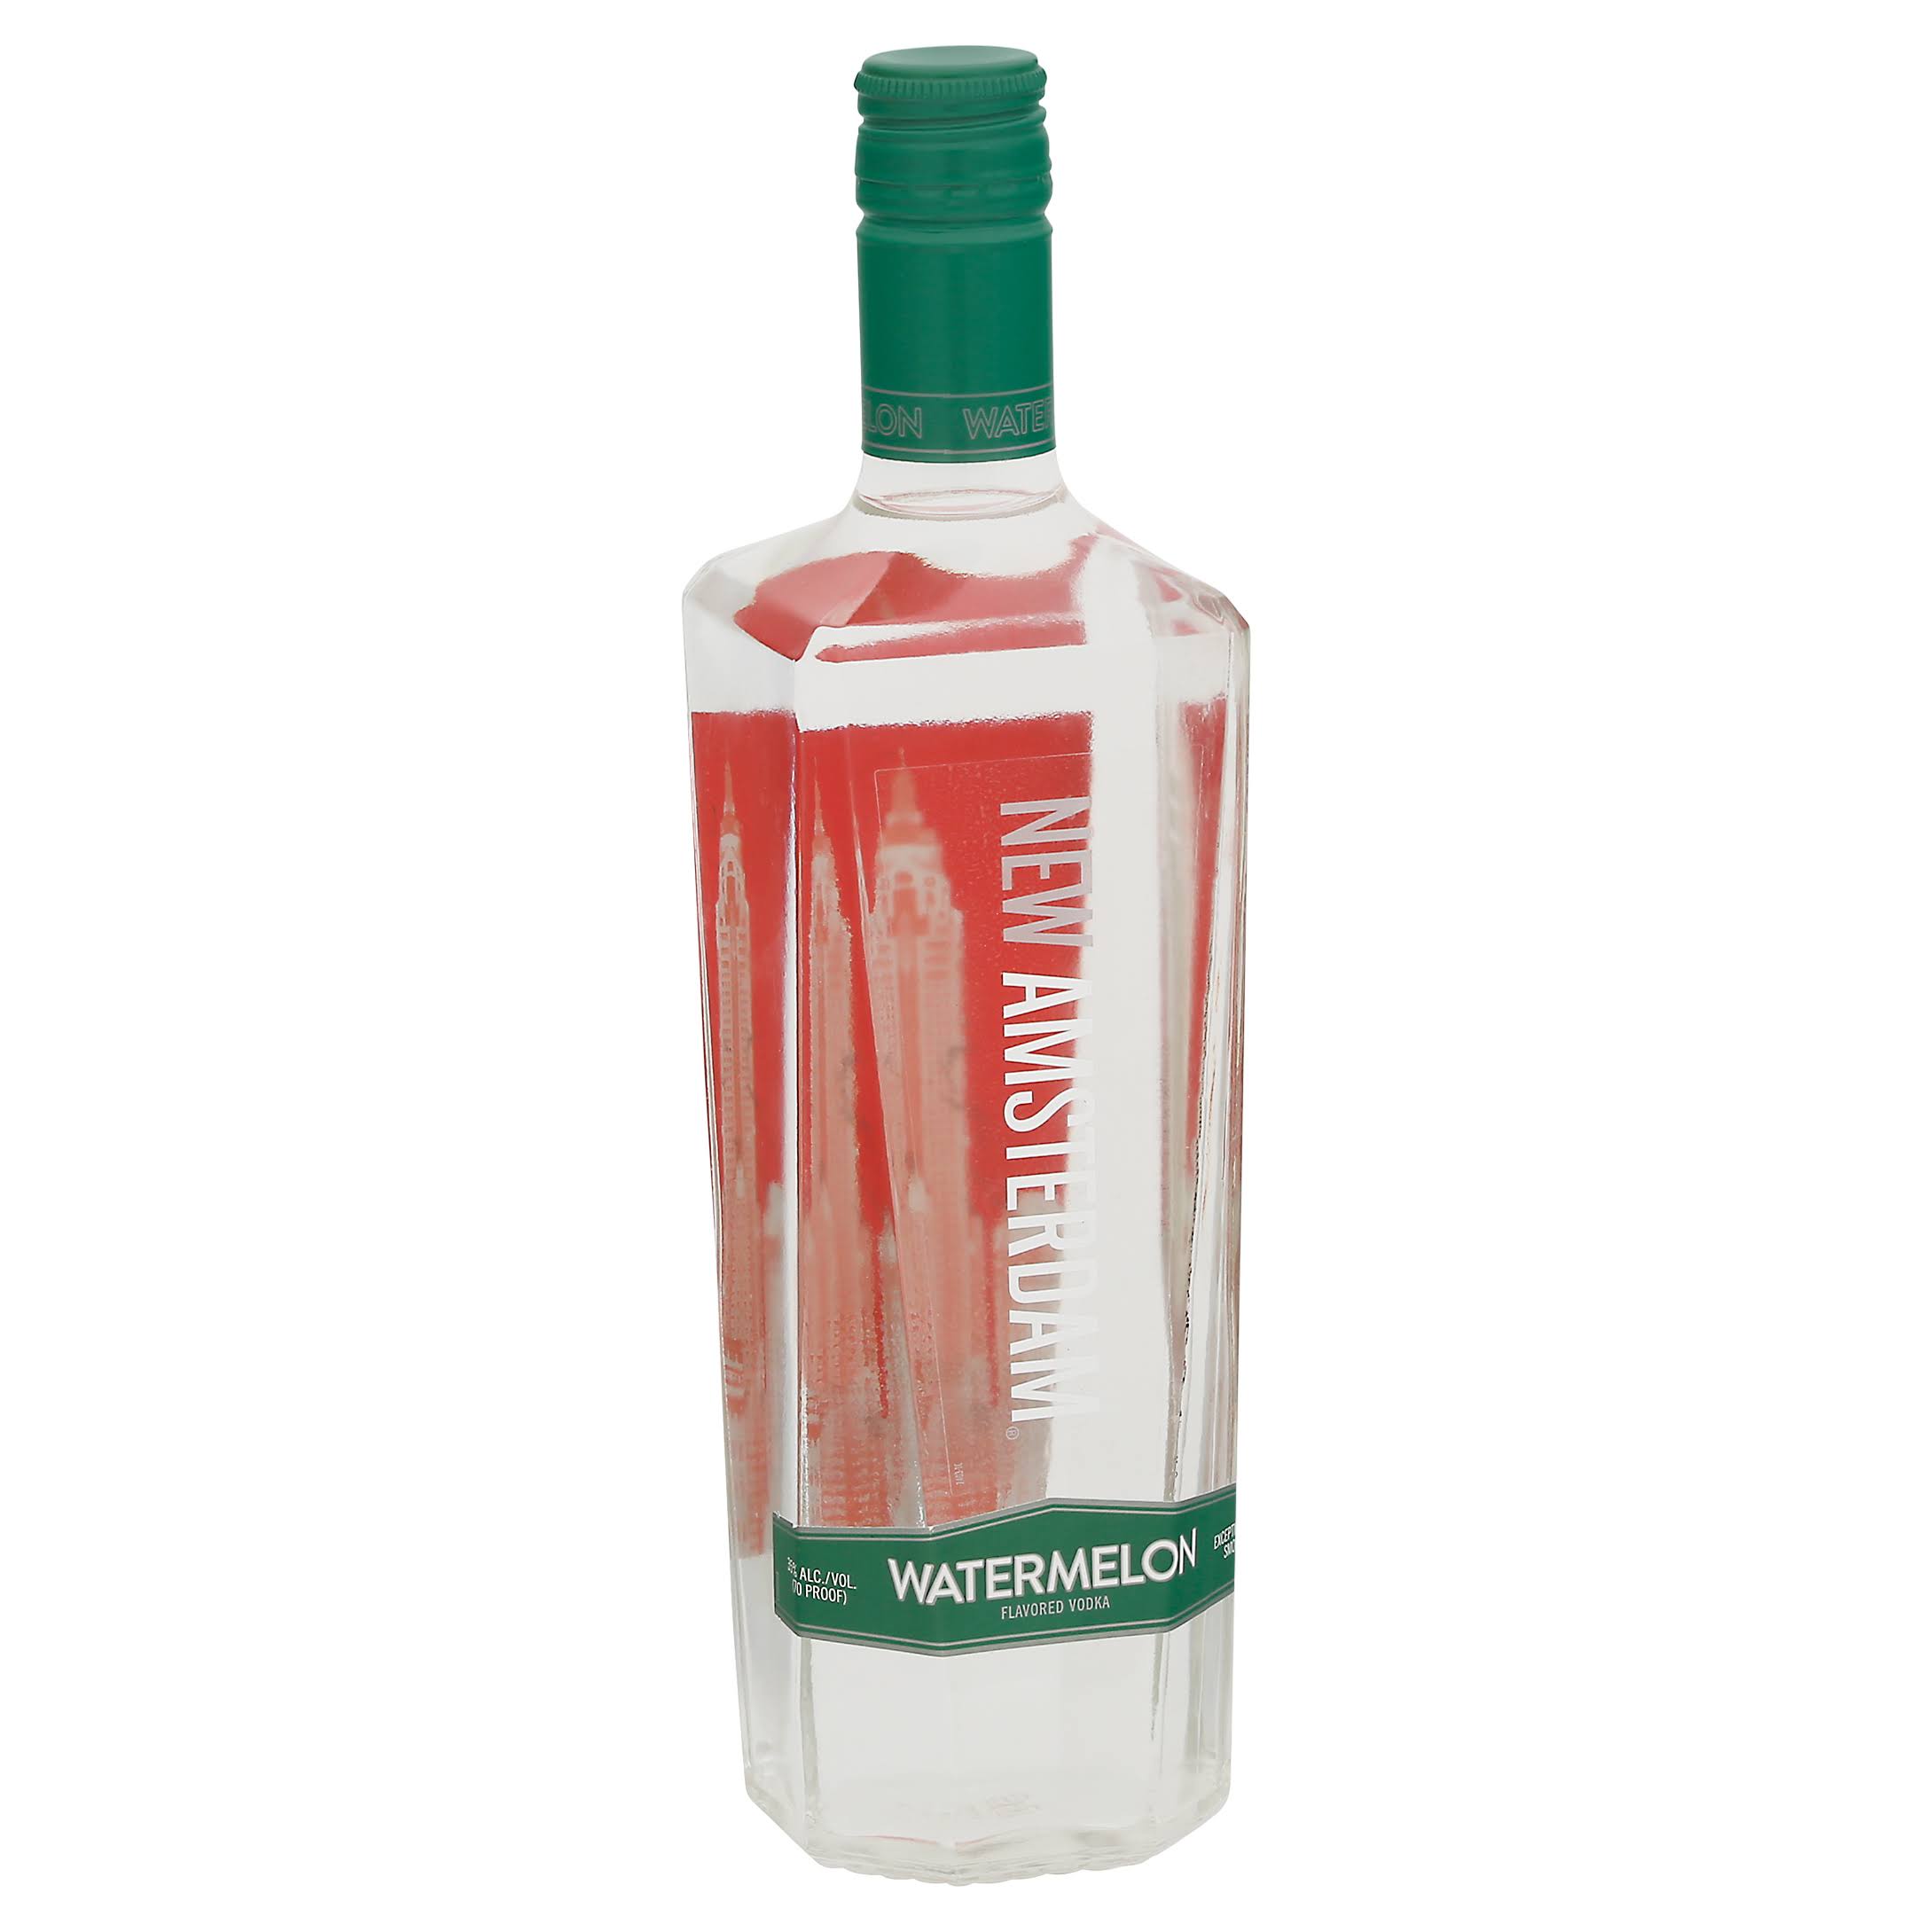 New Amsterdam Vodka, Watermelon - 750 ml